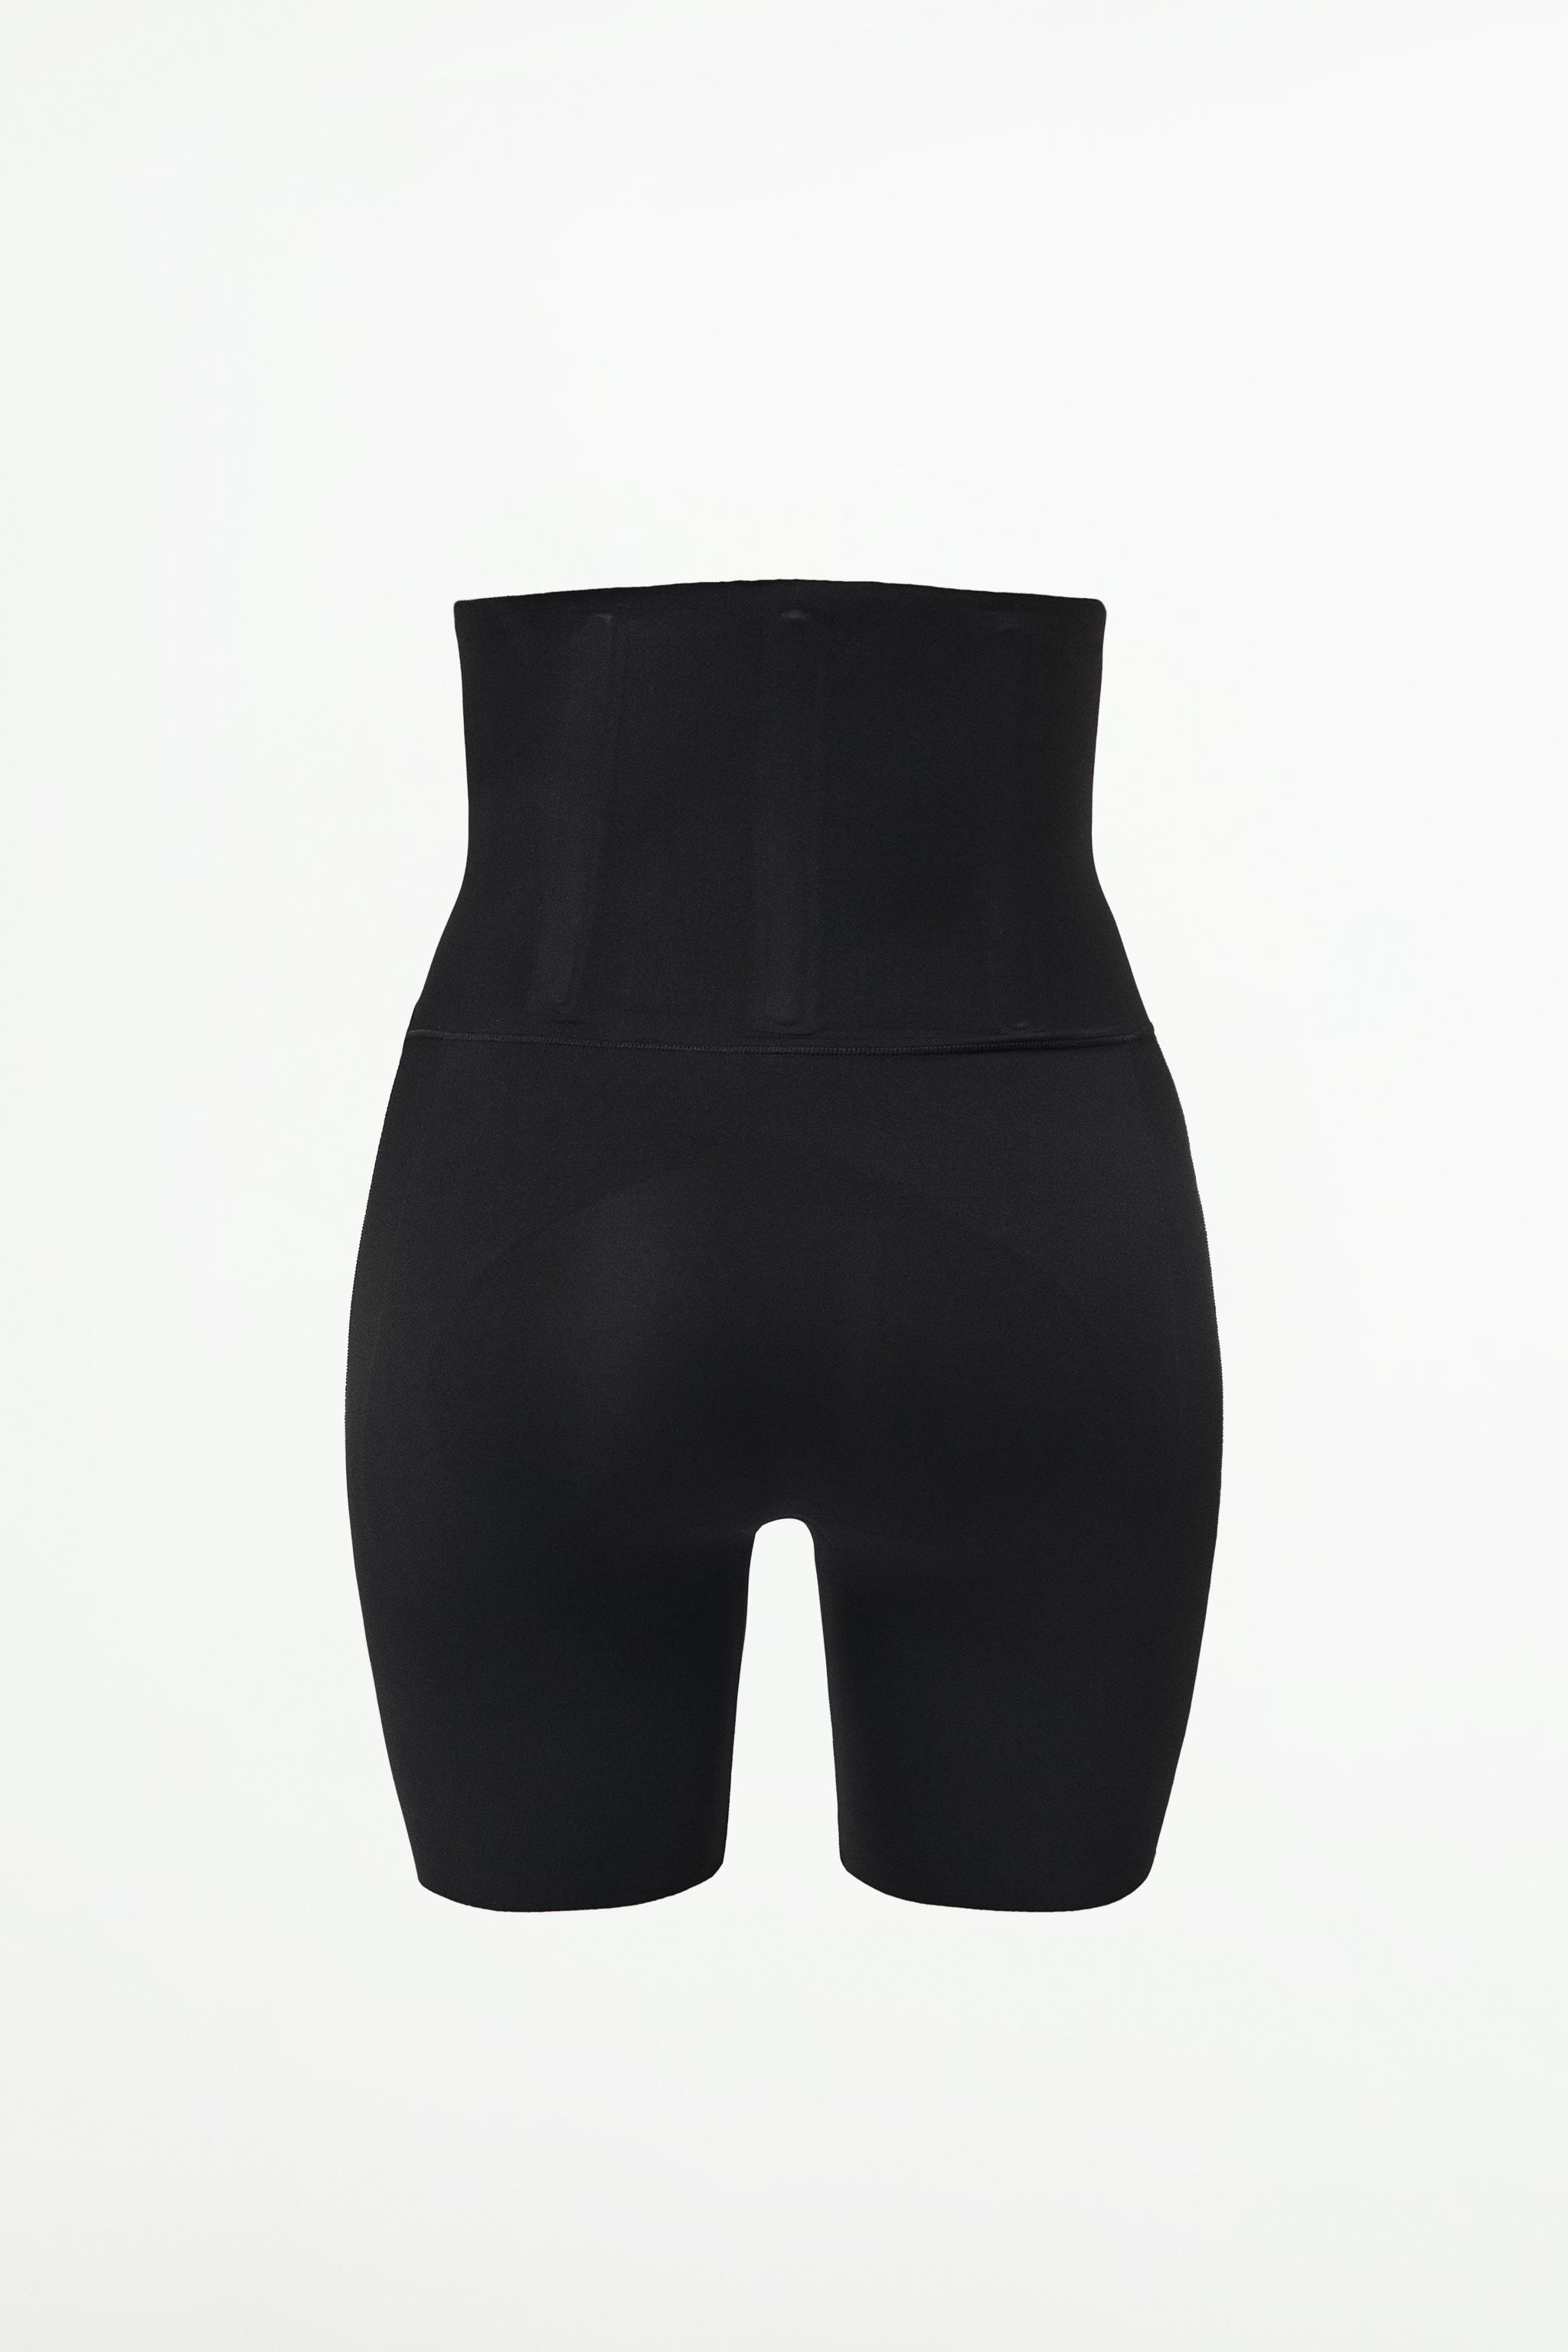 SHEIN BLACK HIGH Waisted Shapewear Shorts - Size L - FREE P&P £7.00 -  PicClick UK